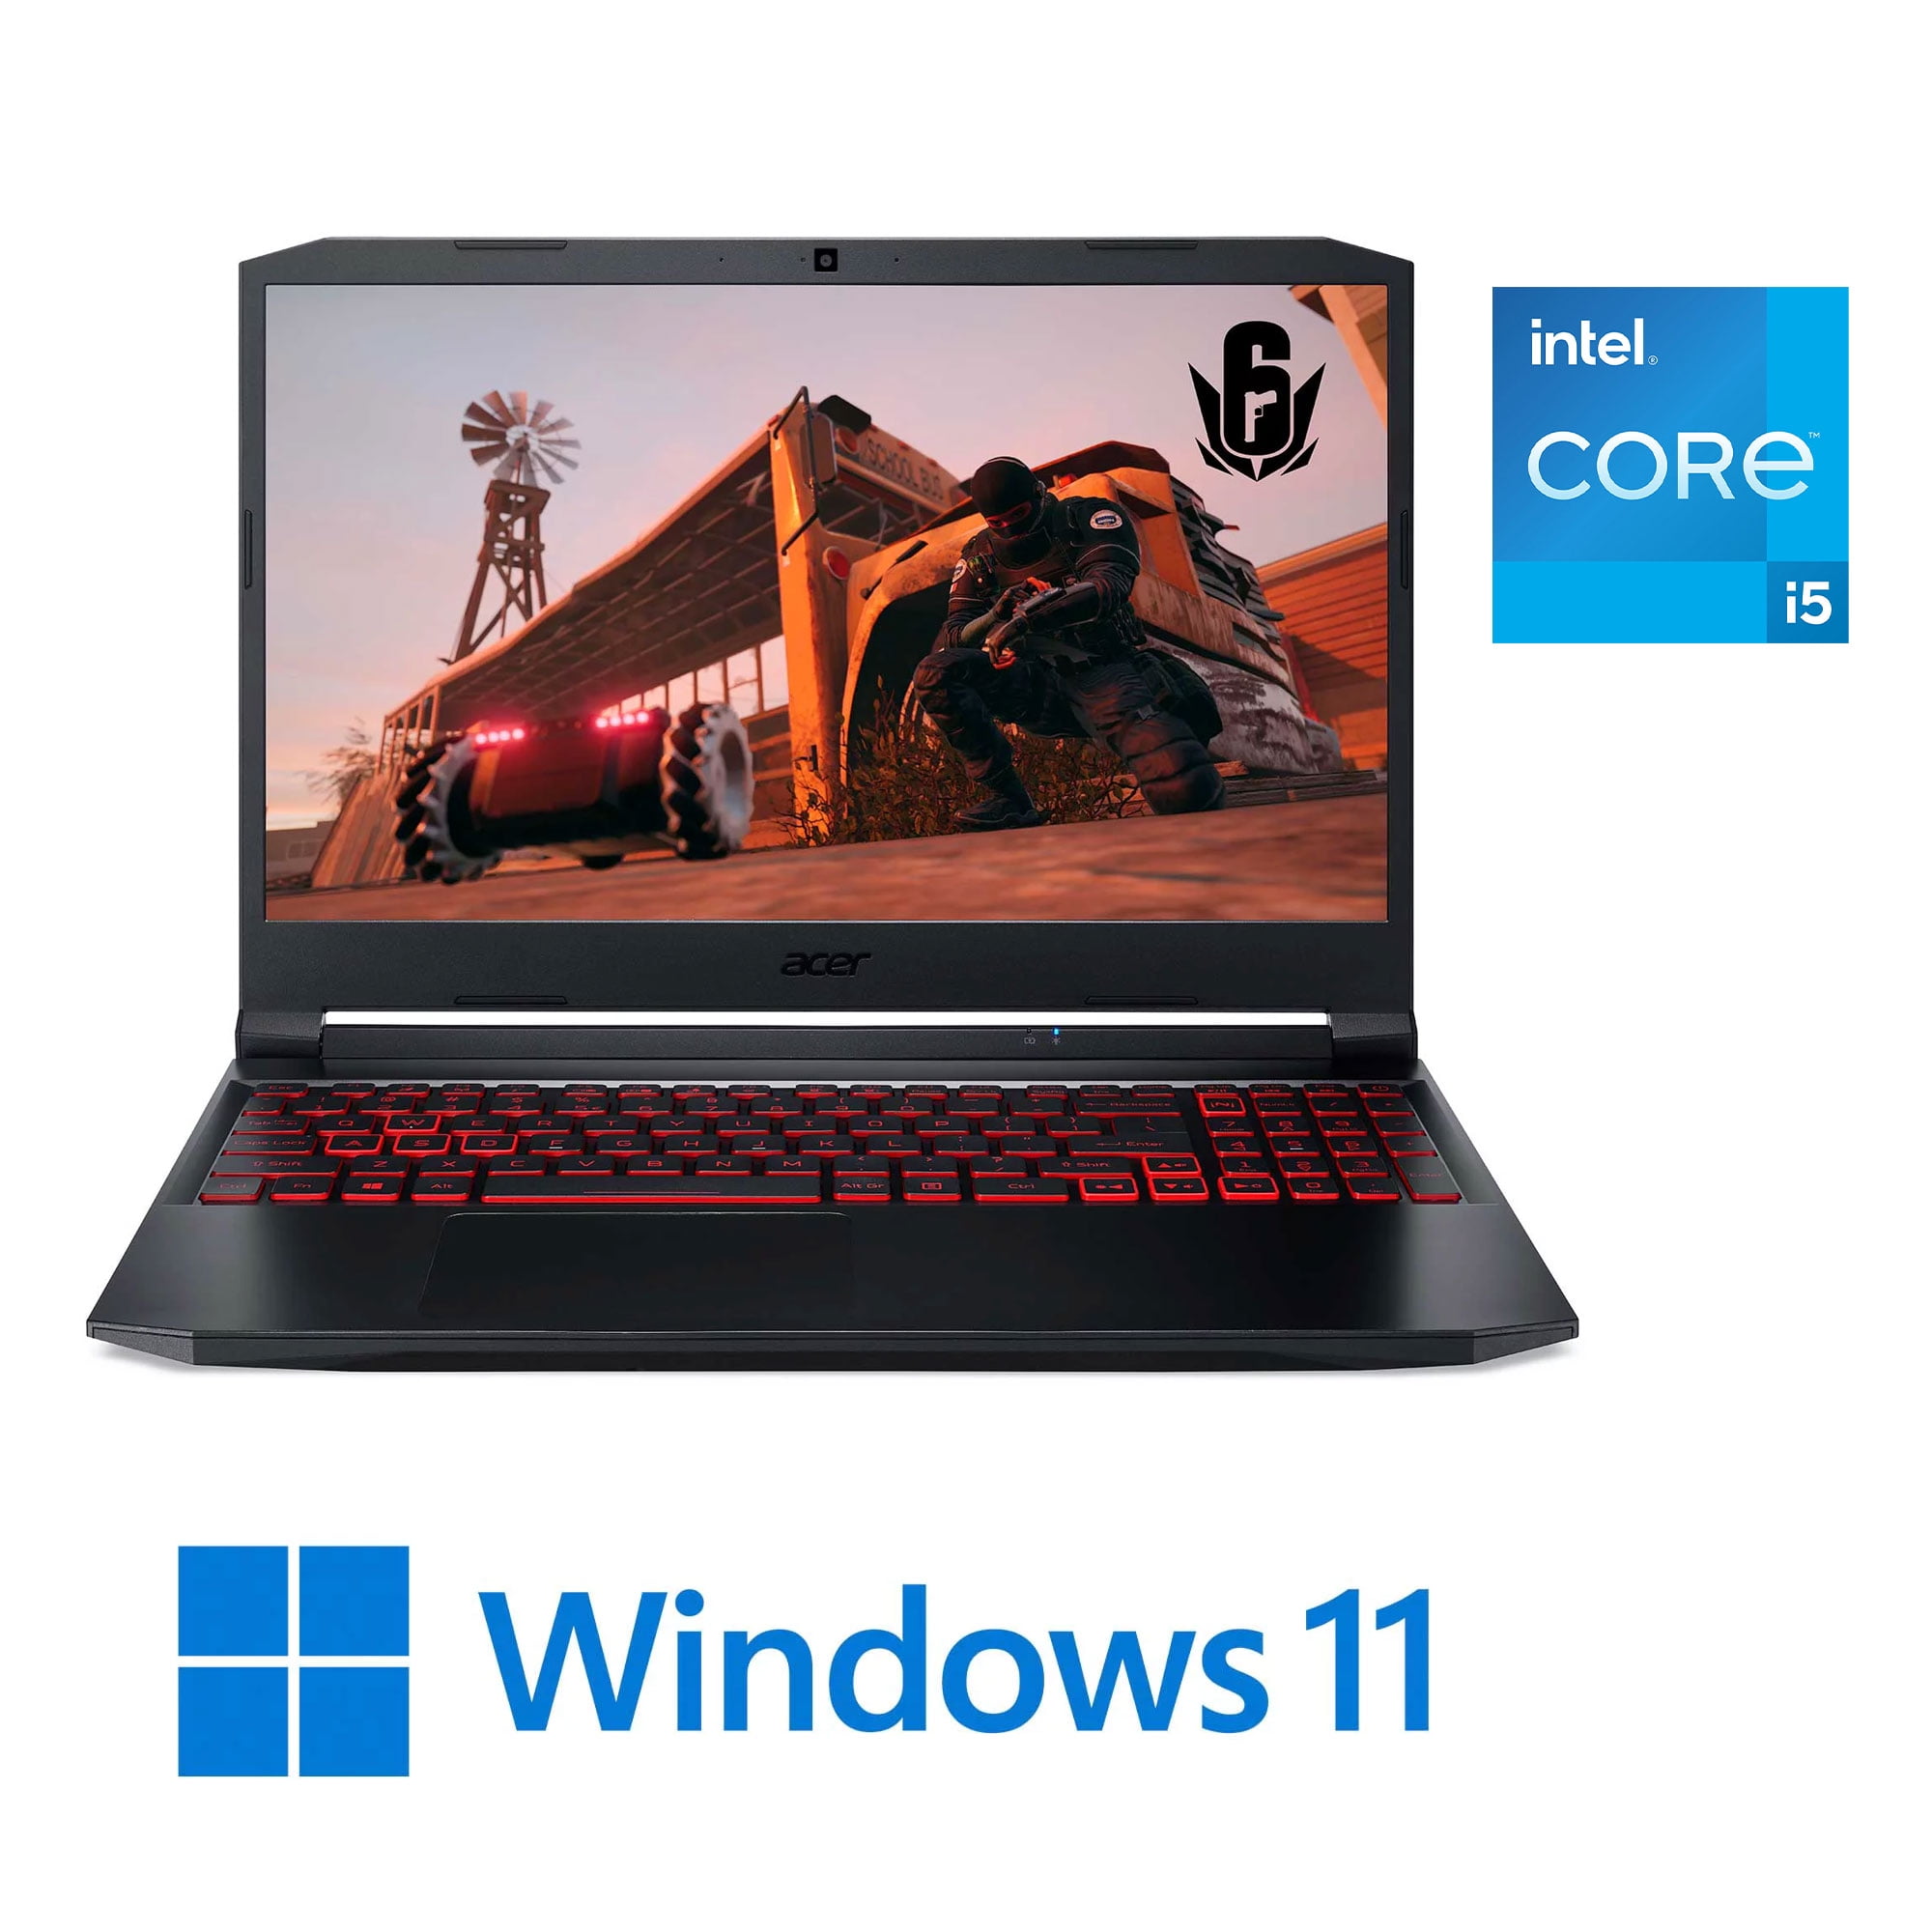 Acer Nitro 5 , 15.6" Full HD IPS 144Hz Display, 11th Gen Intel Core i5-11400H, NVIDIA GeForce RTX 3050Ti Laptop GPU, 16GB DDR4, 512GB NVMe SSD, Windows 11 AN515-57-5700 - Walmart.com